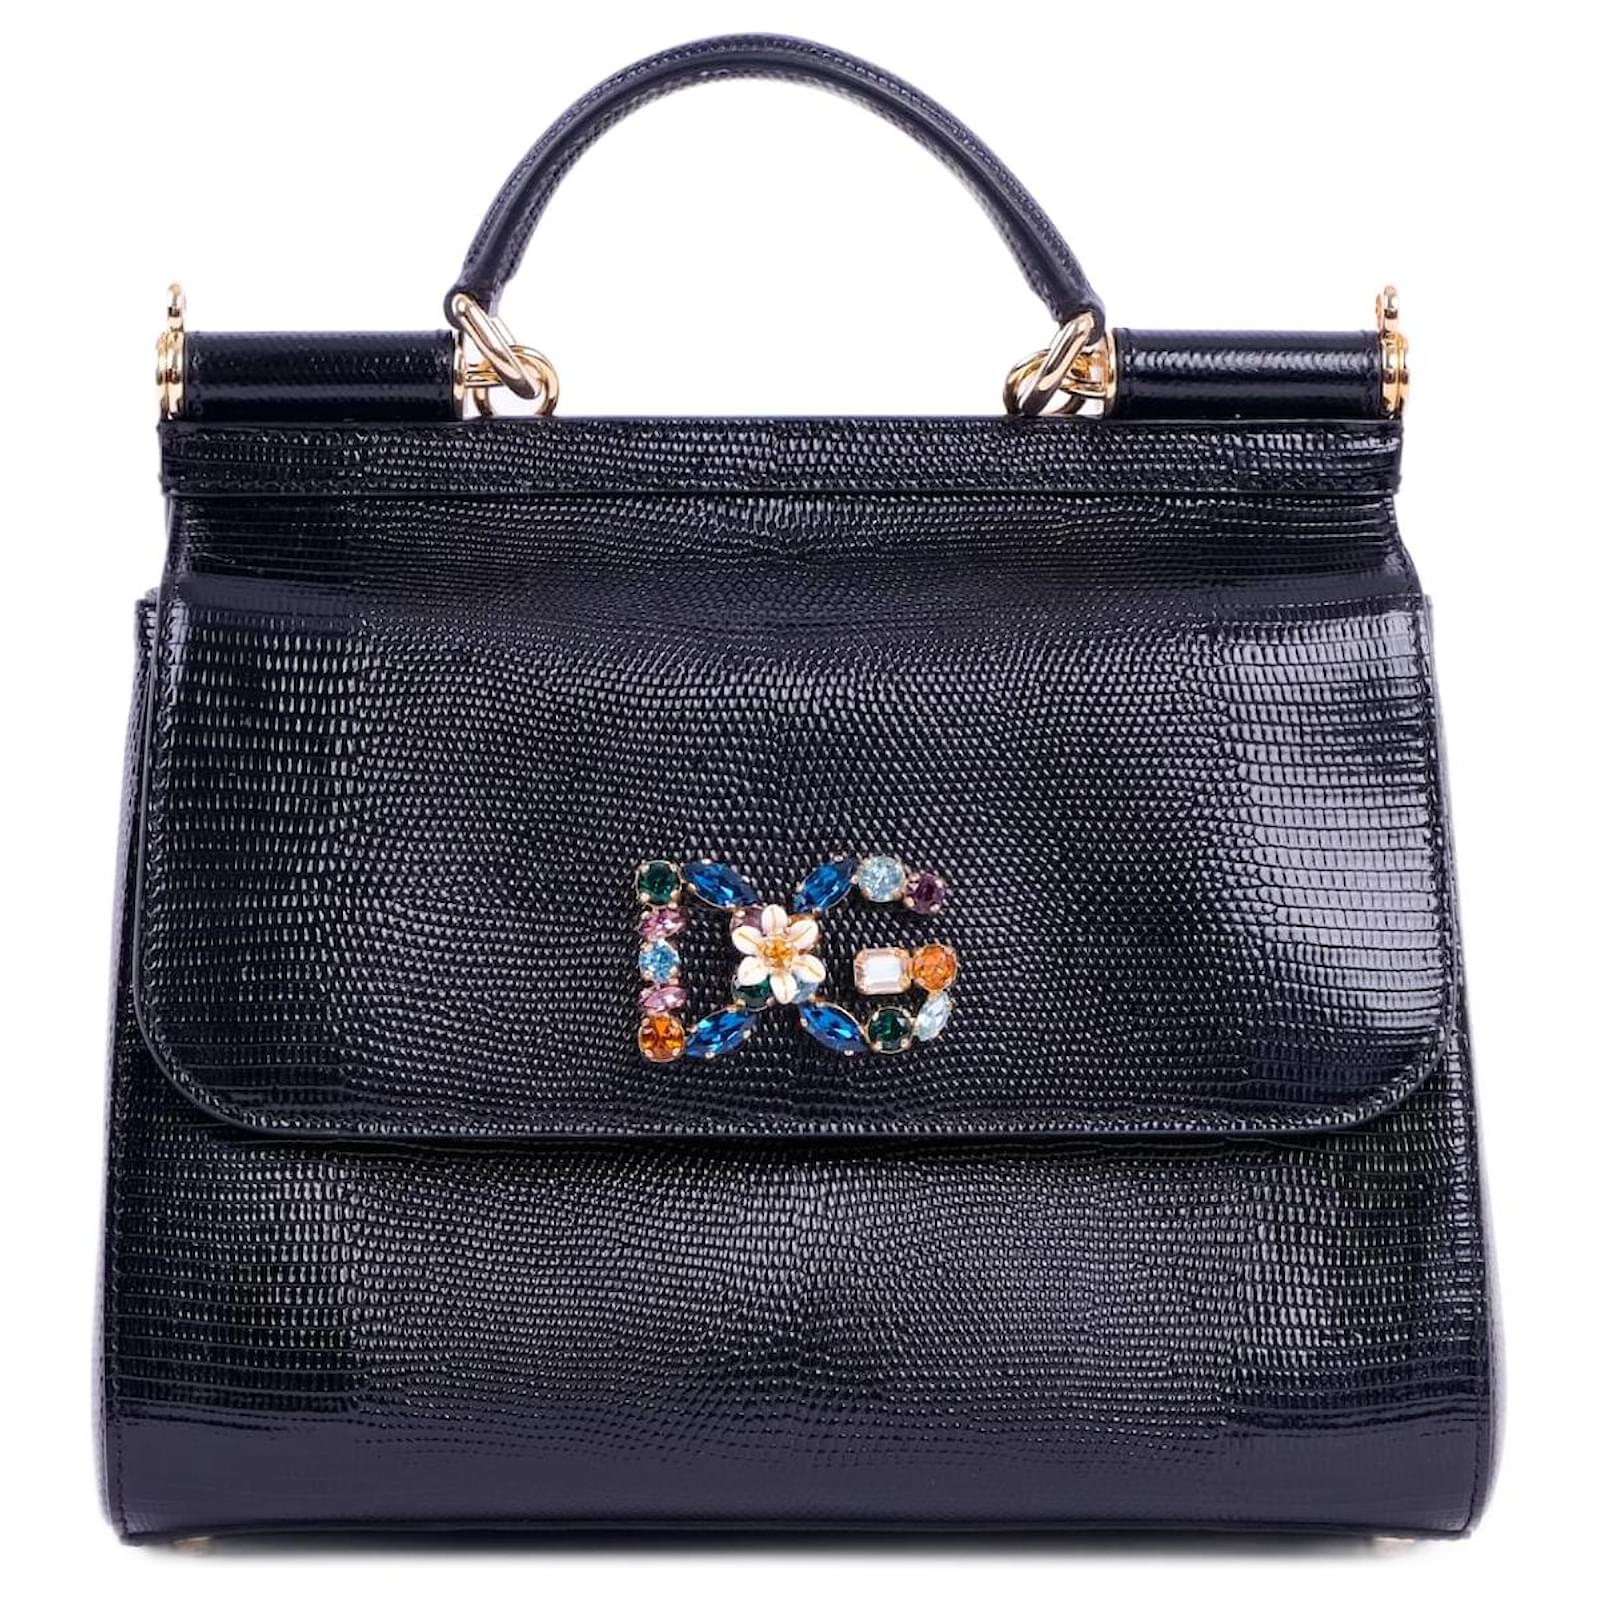 DOLCE & GABBANA: handbag for woman - Black | Dolce & Gabbana handbag  BB6002A1037 online at GIGLIO.COM